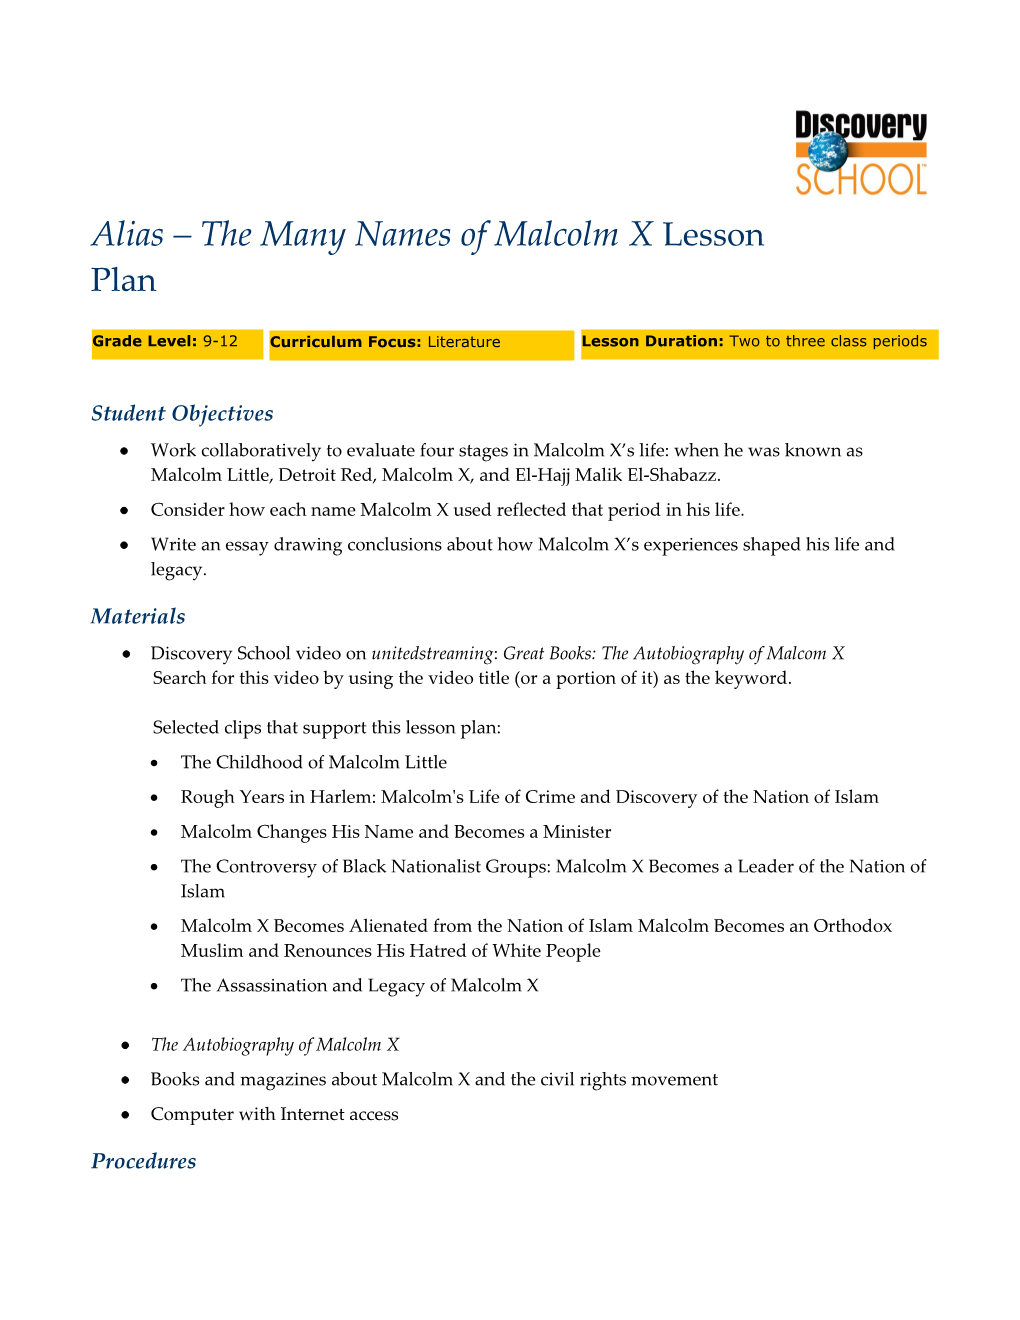 Alias: the Many Names of Malcom X 2